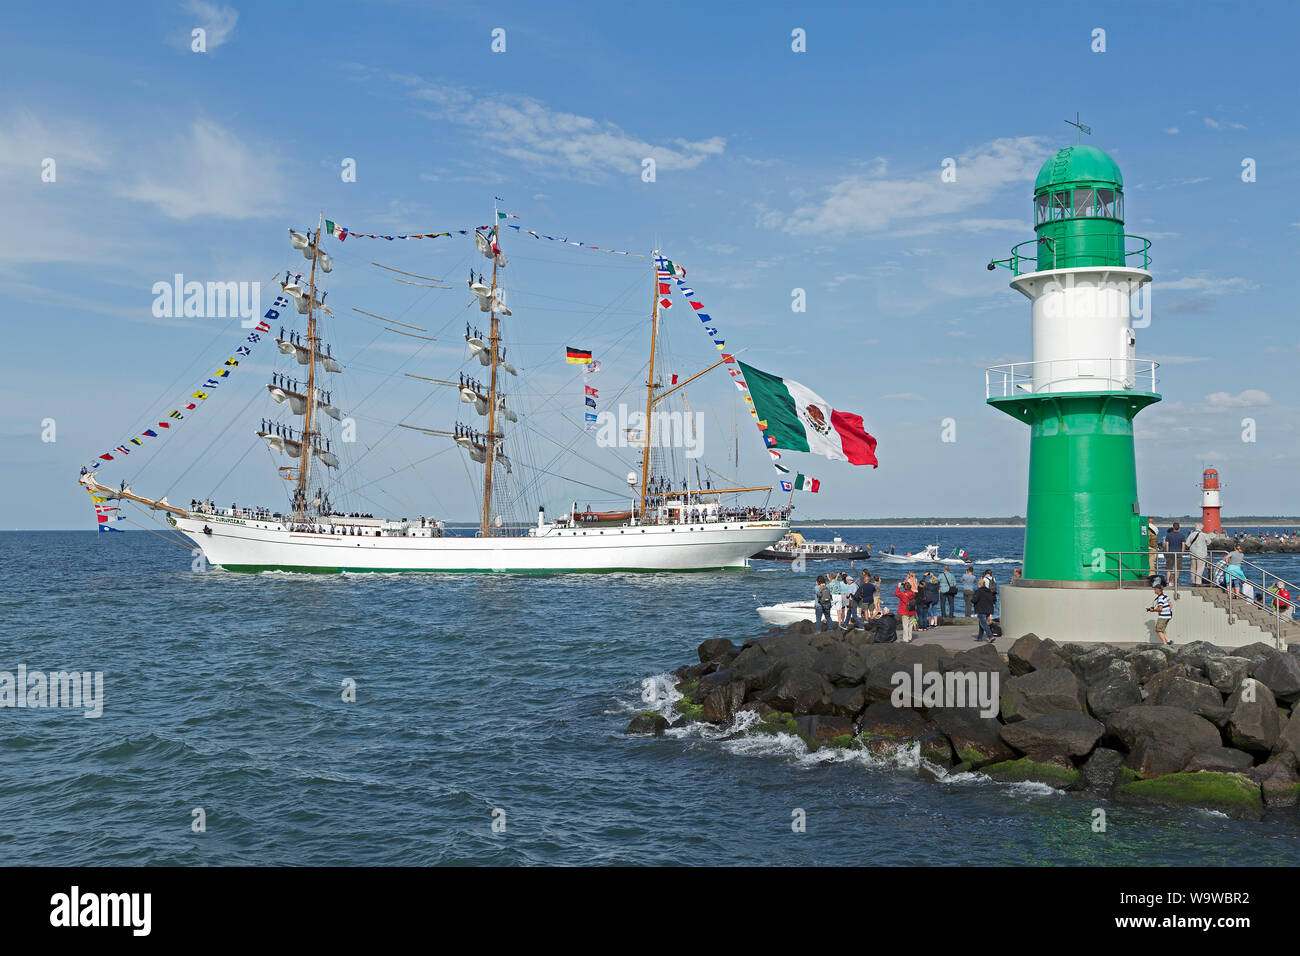 Mexican bark Cuauhtemoc leaving Hanse-Sail with sailors standing on the masts, Warnemünde, Rostock, Mecklenburg-West Pomerania, Germany Stock Photo